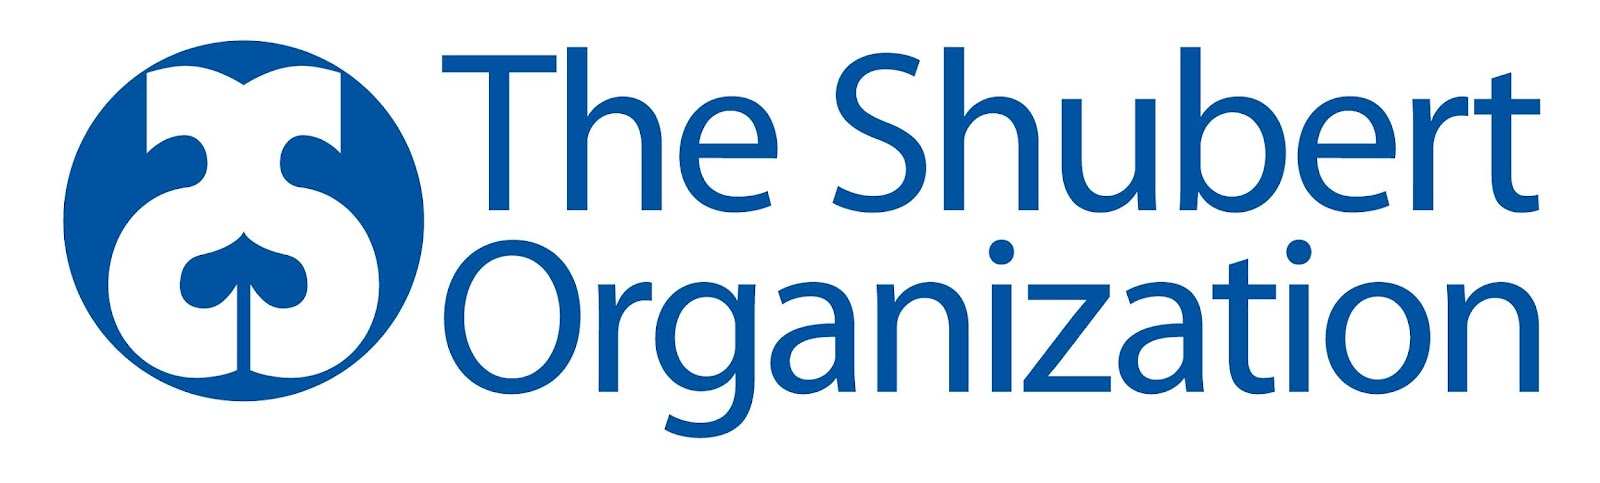 The Shubert Organization logo